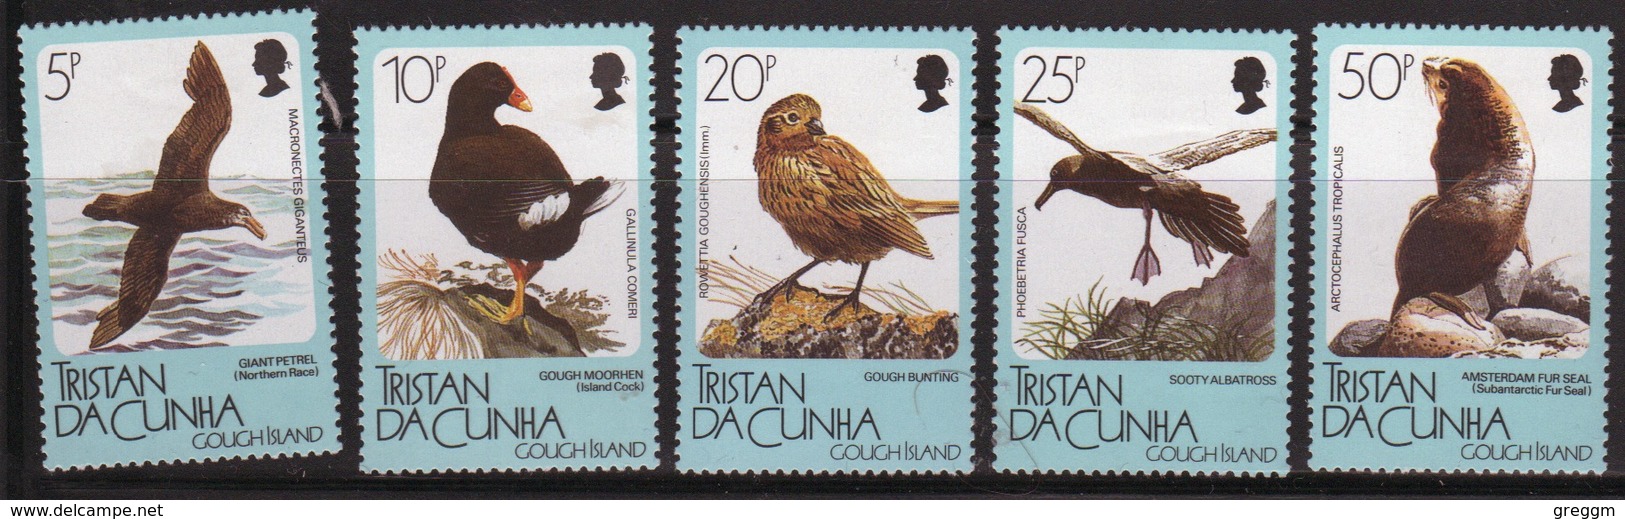 Tristan Da Cunha 1989 Set Of Stamps To Celebrate Fauna Of Gough Island. - Tristan Da Cunha